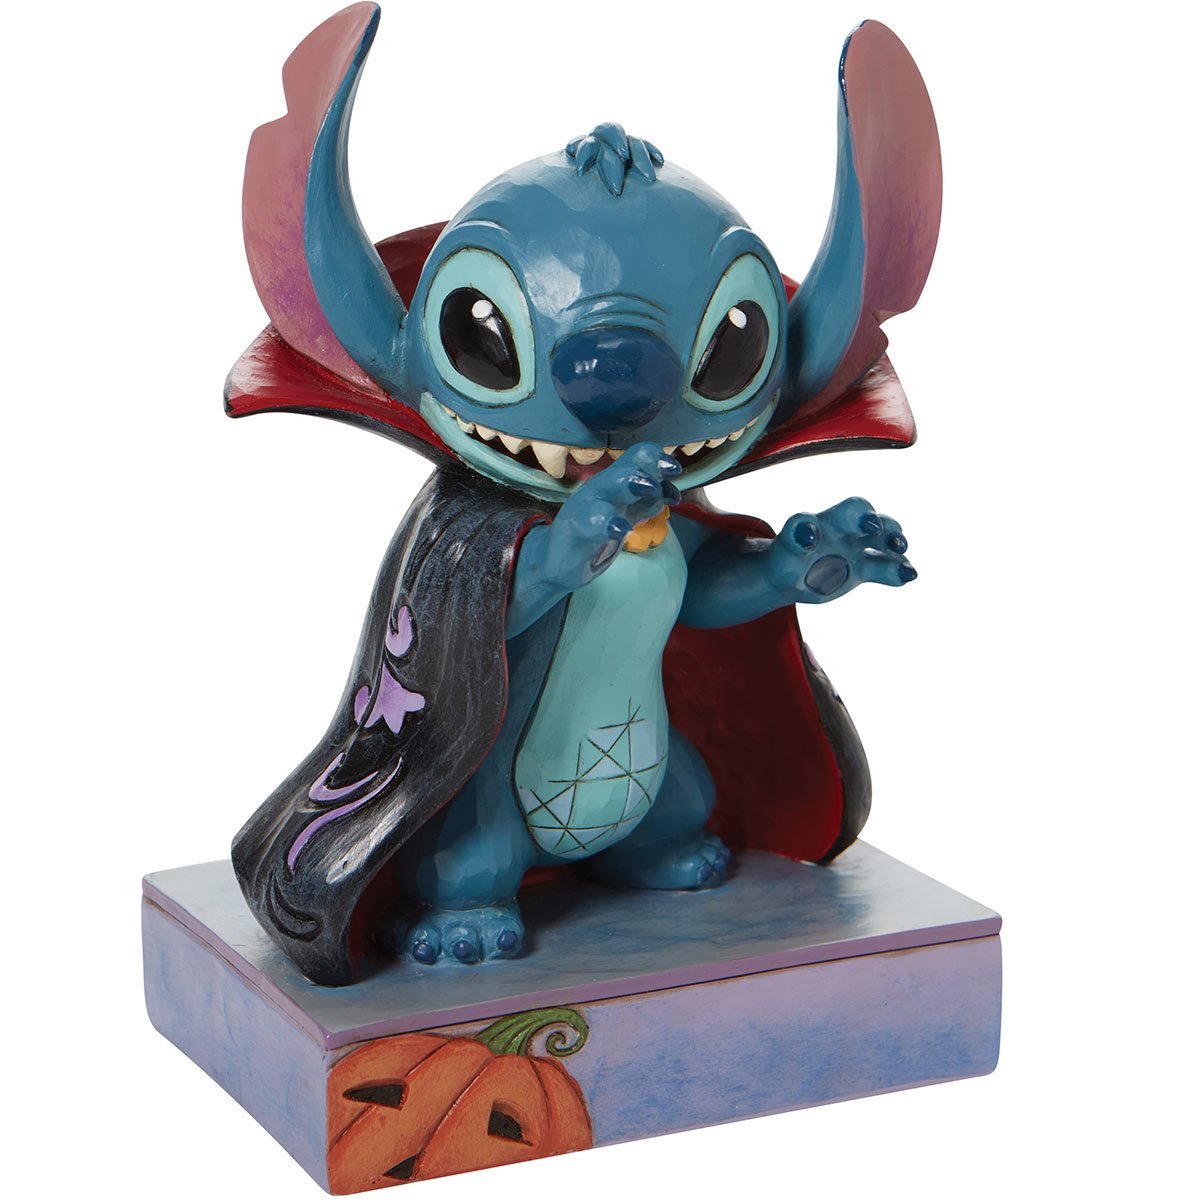 Statuette Disney collection Lilo et Stitch